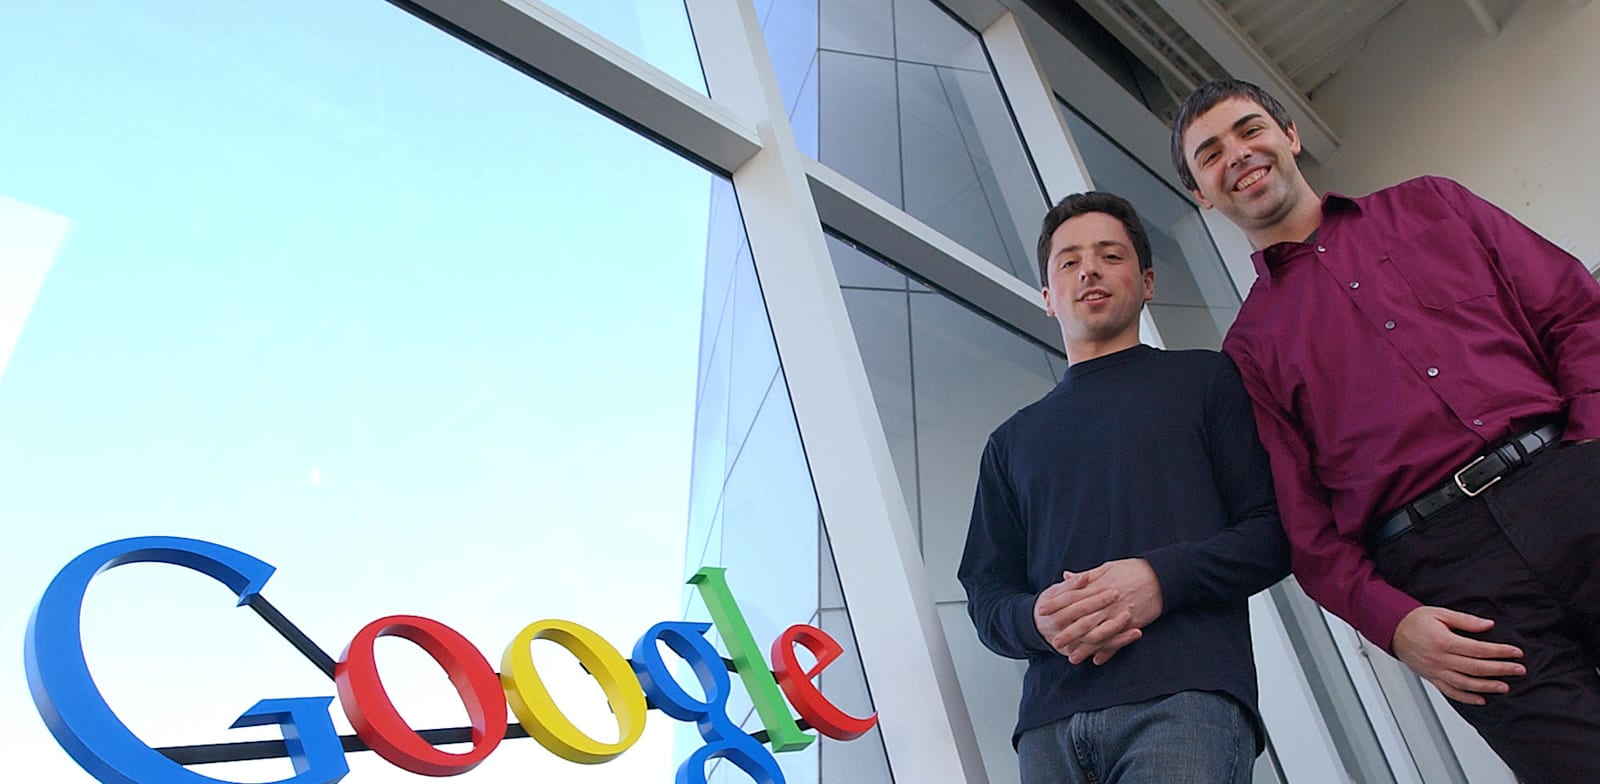 מייסדי גוגל, לארי פייג' וסרגיי ברין / צילום: ben margot